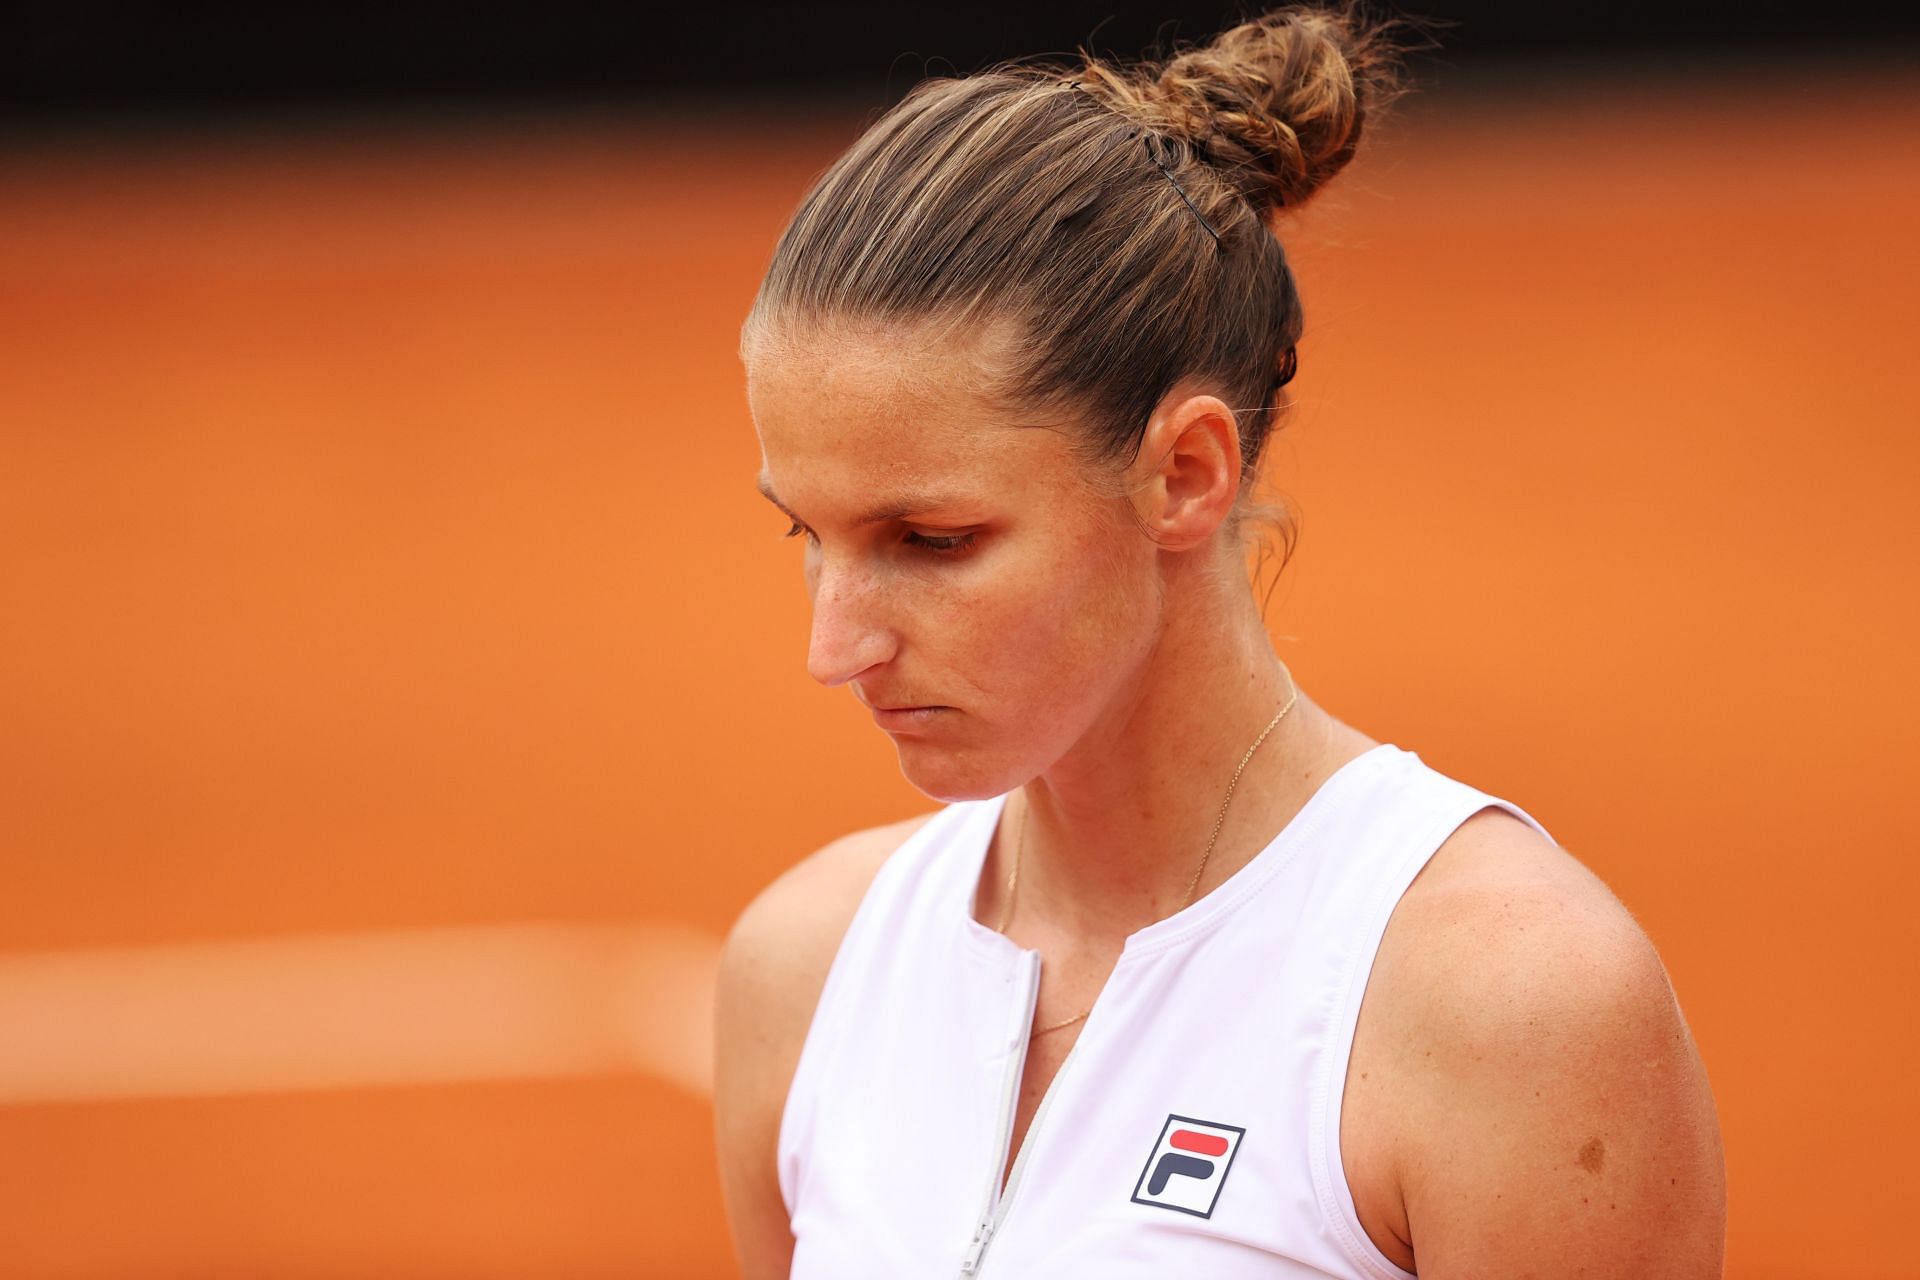 Karolina Plikova at the 2021 Italian Open.